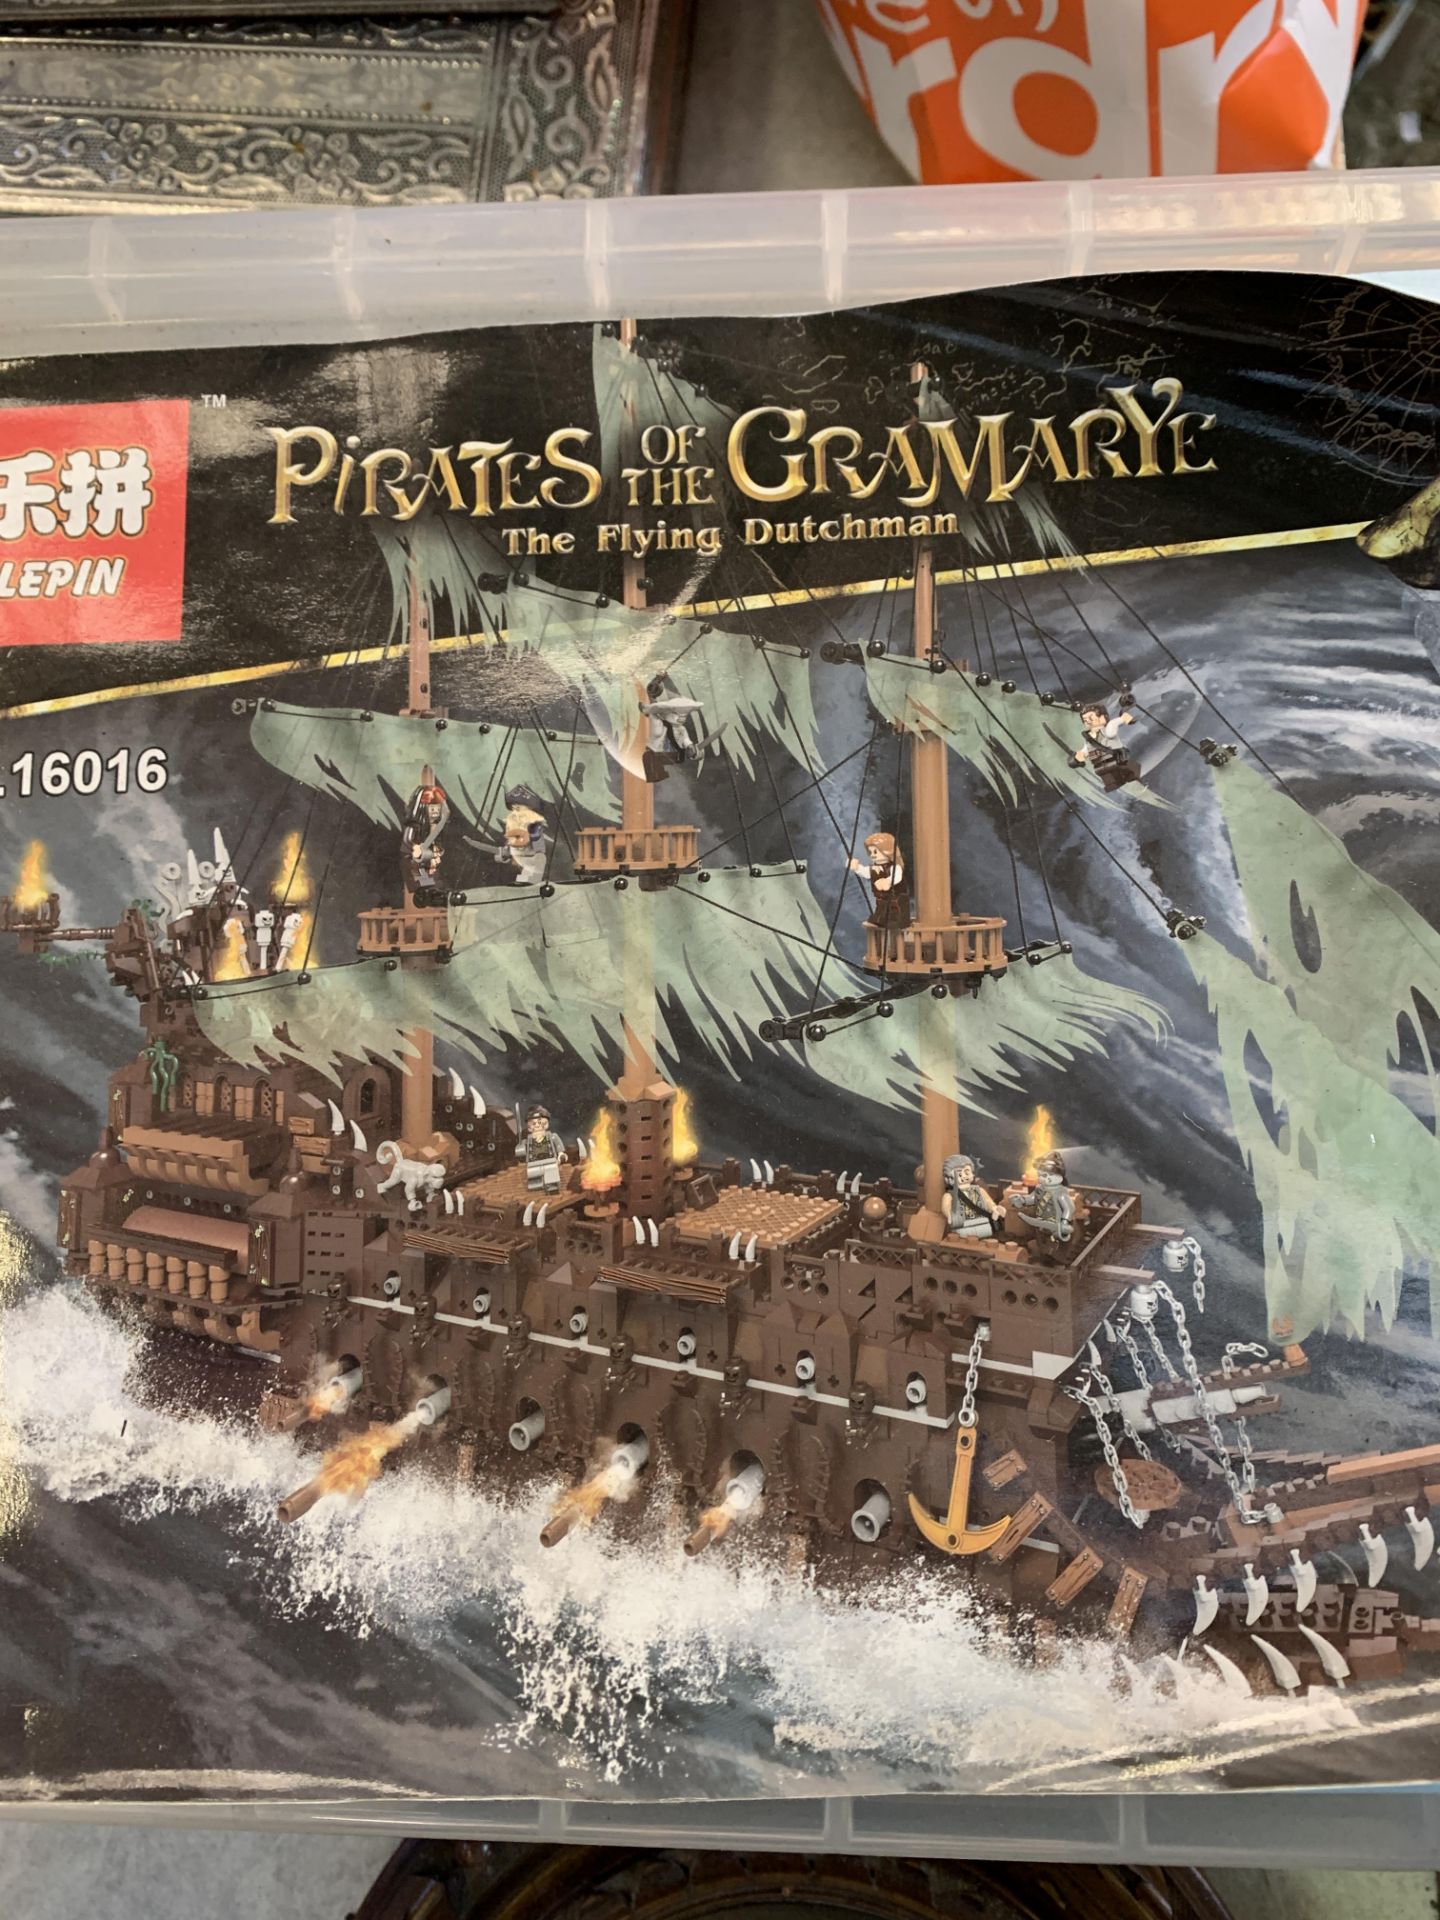 LEPIN (Lego style) no. 16016 pirate ship set.